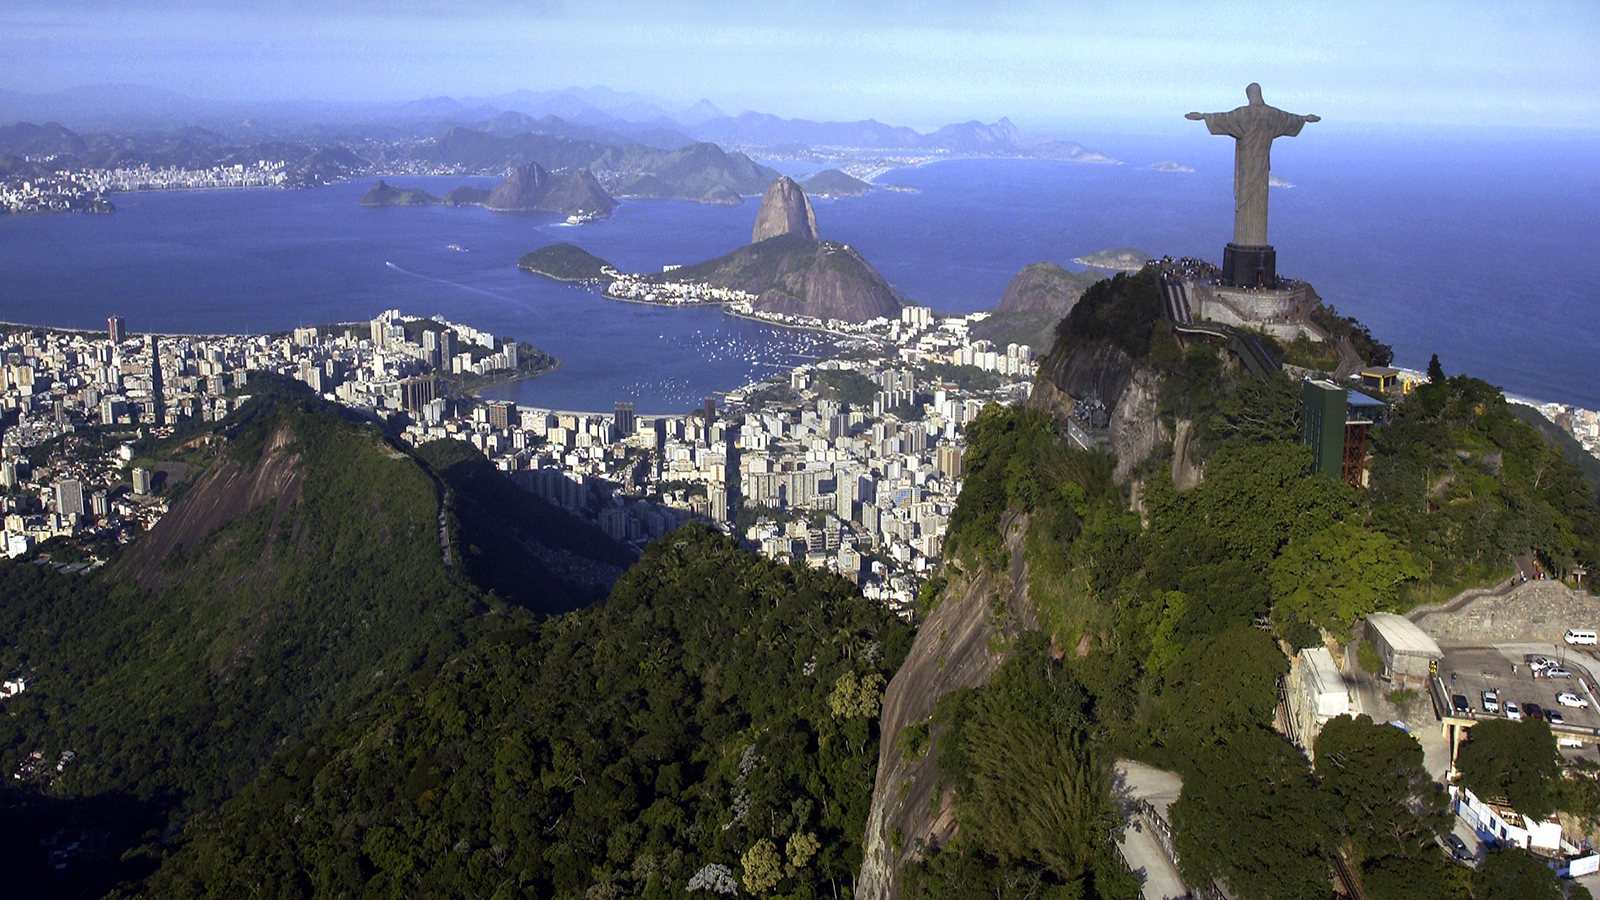 Brazil’s fintech boom offers new vertical opportunities for investors